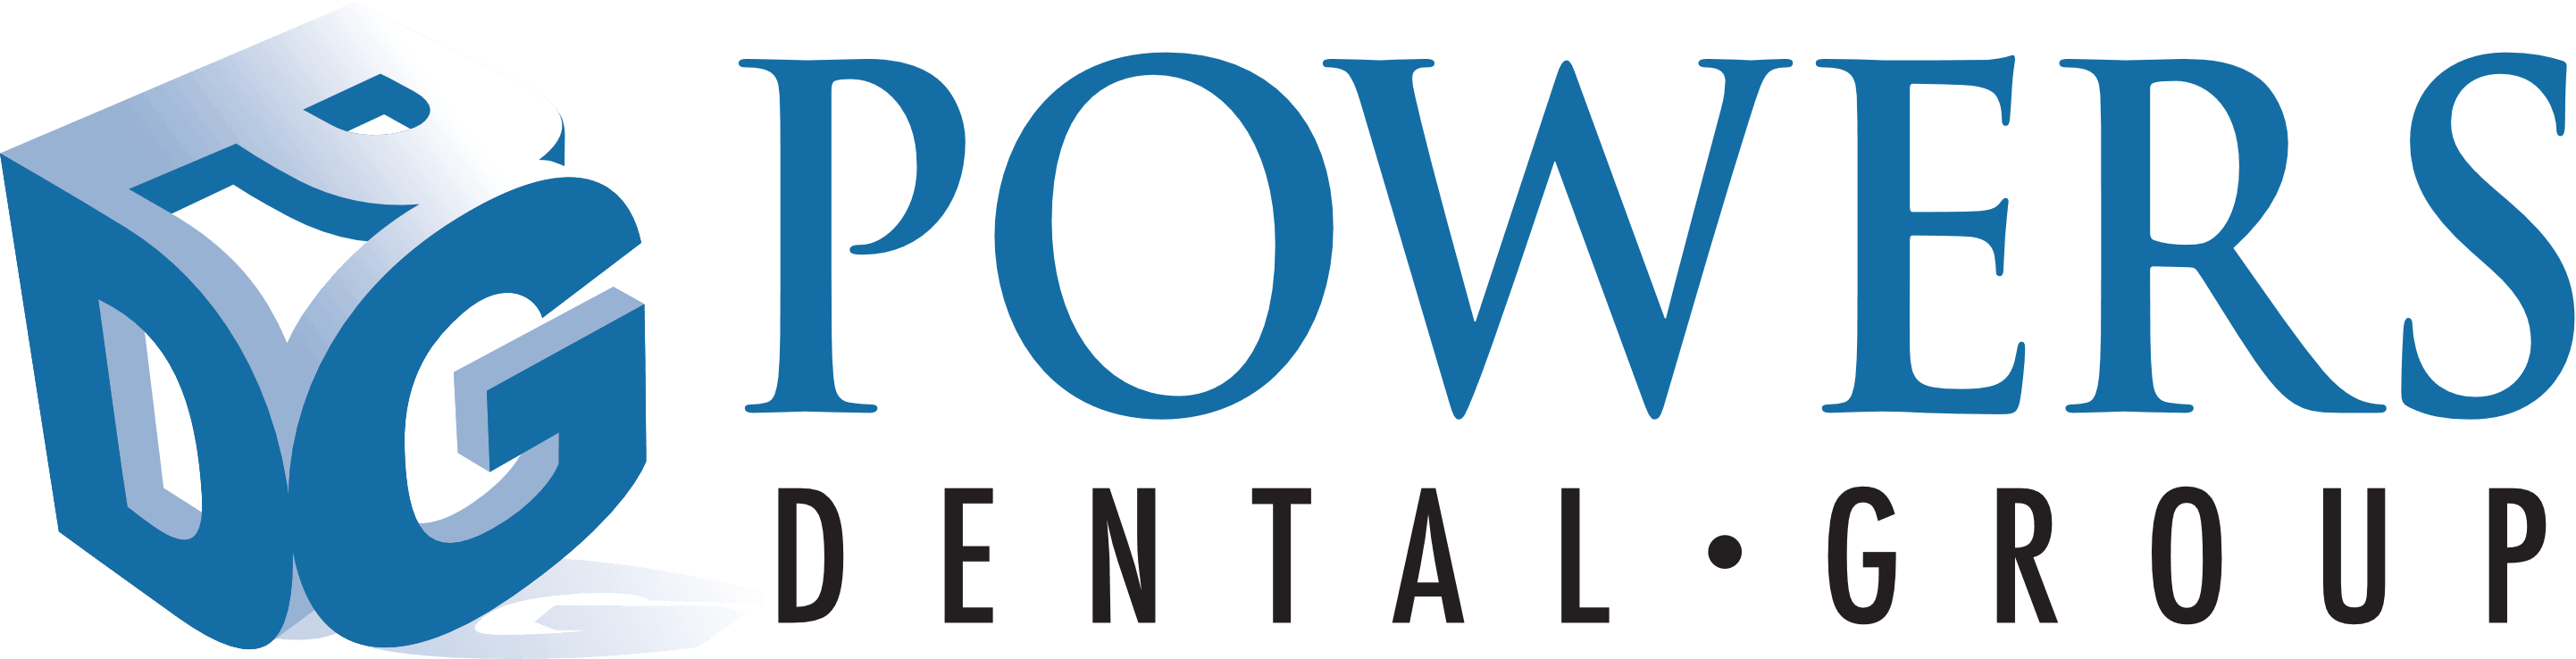 Powers Dental Group